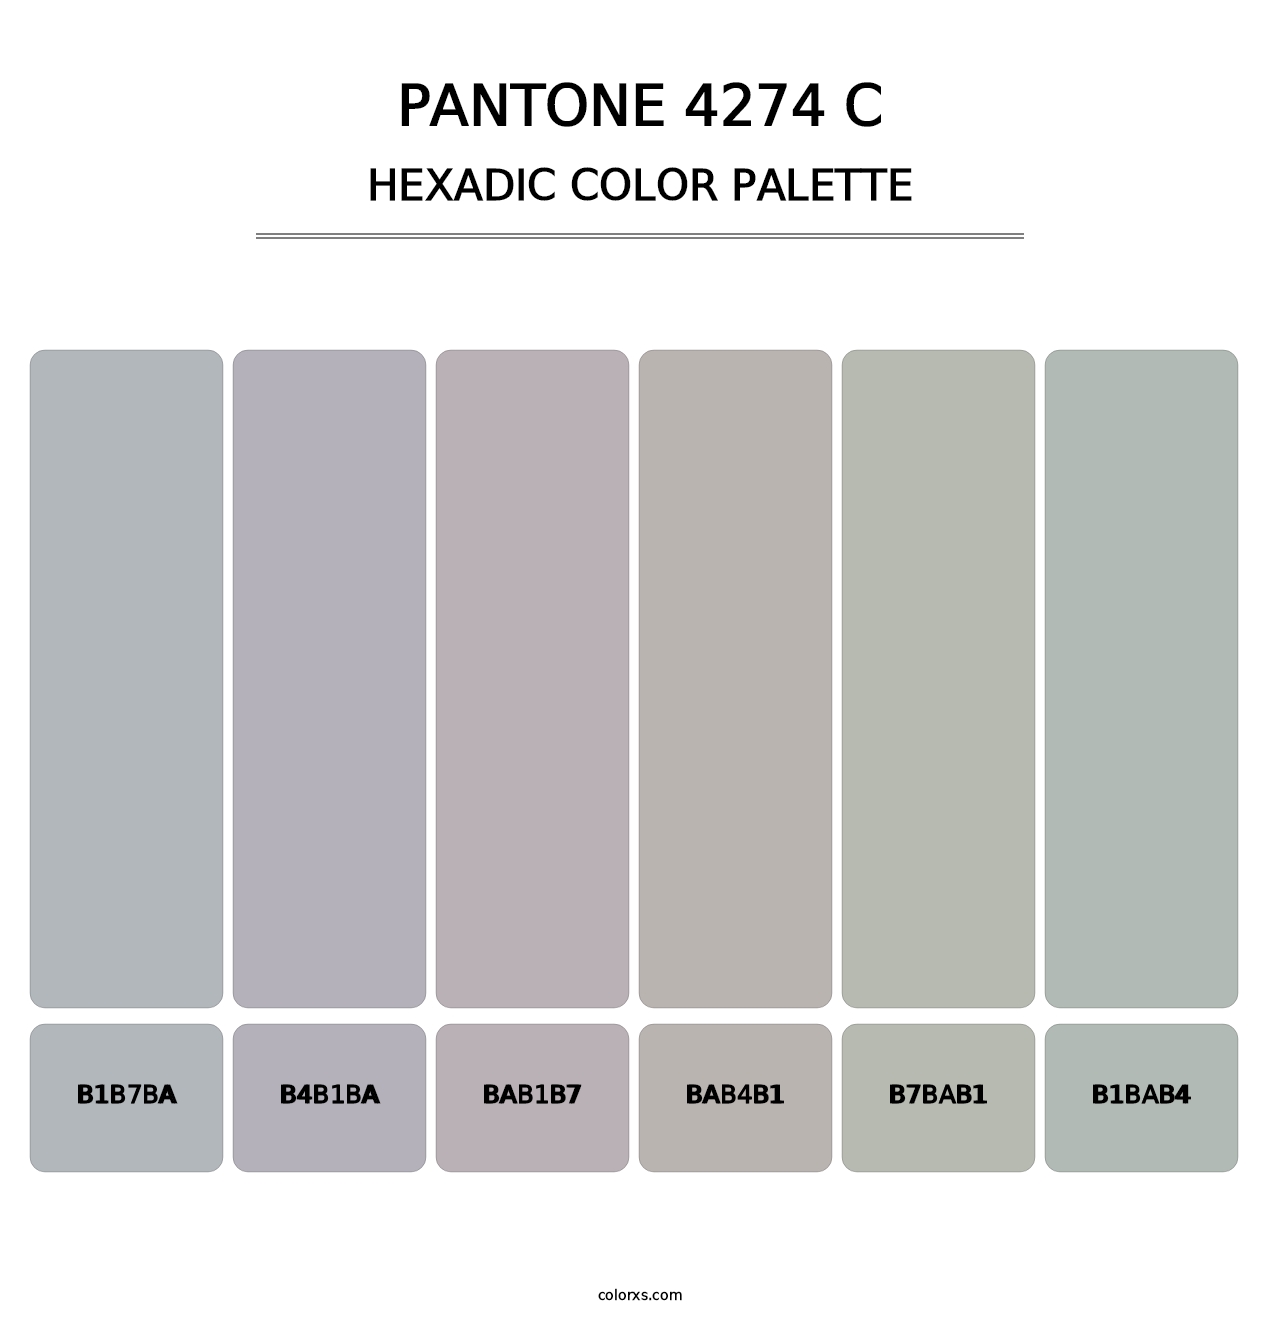 PANTONE 4274 C - Hexadic Color Palette